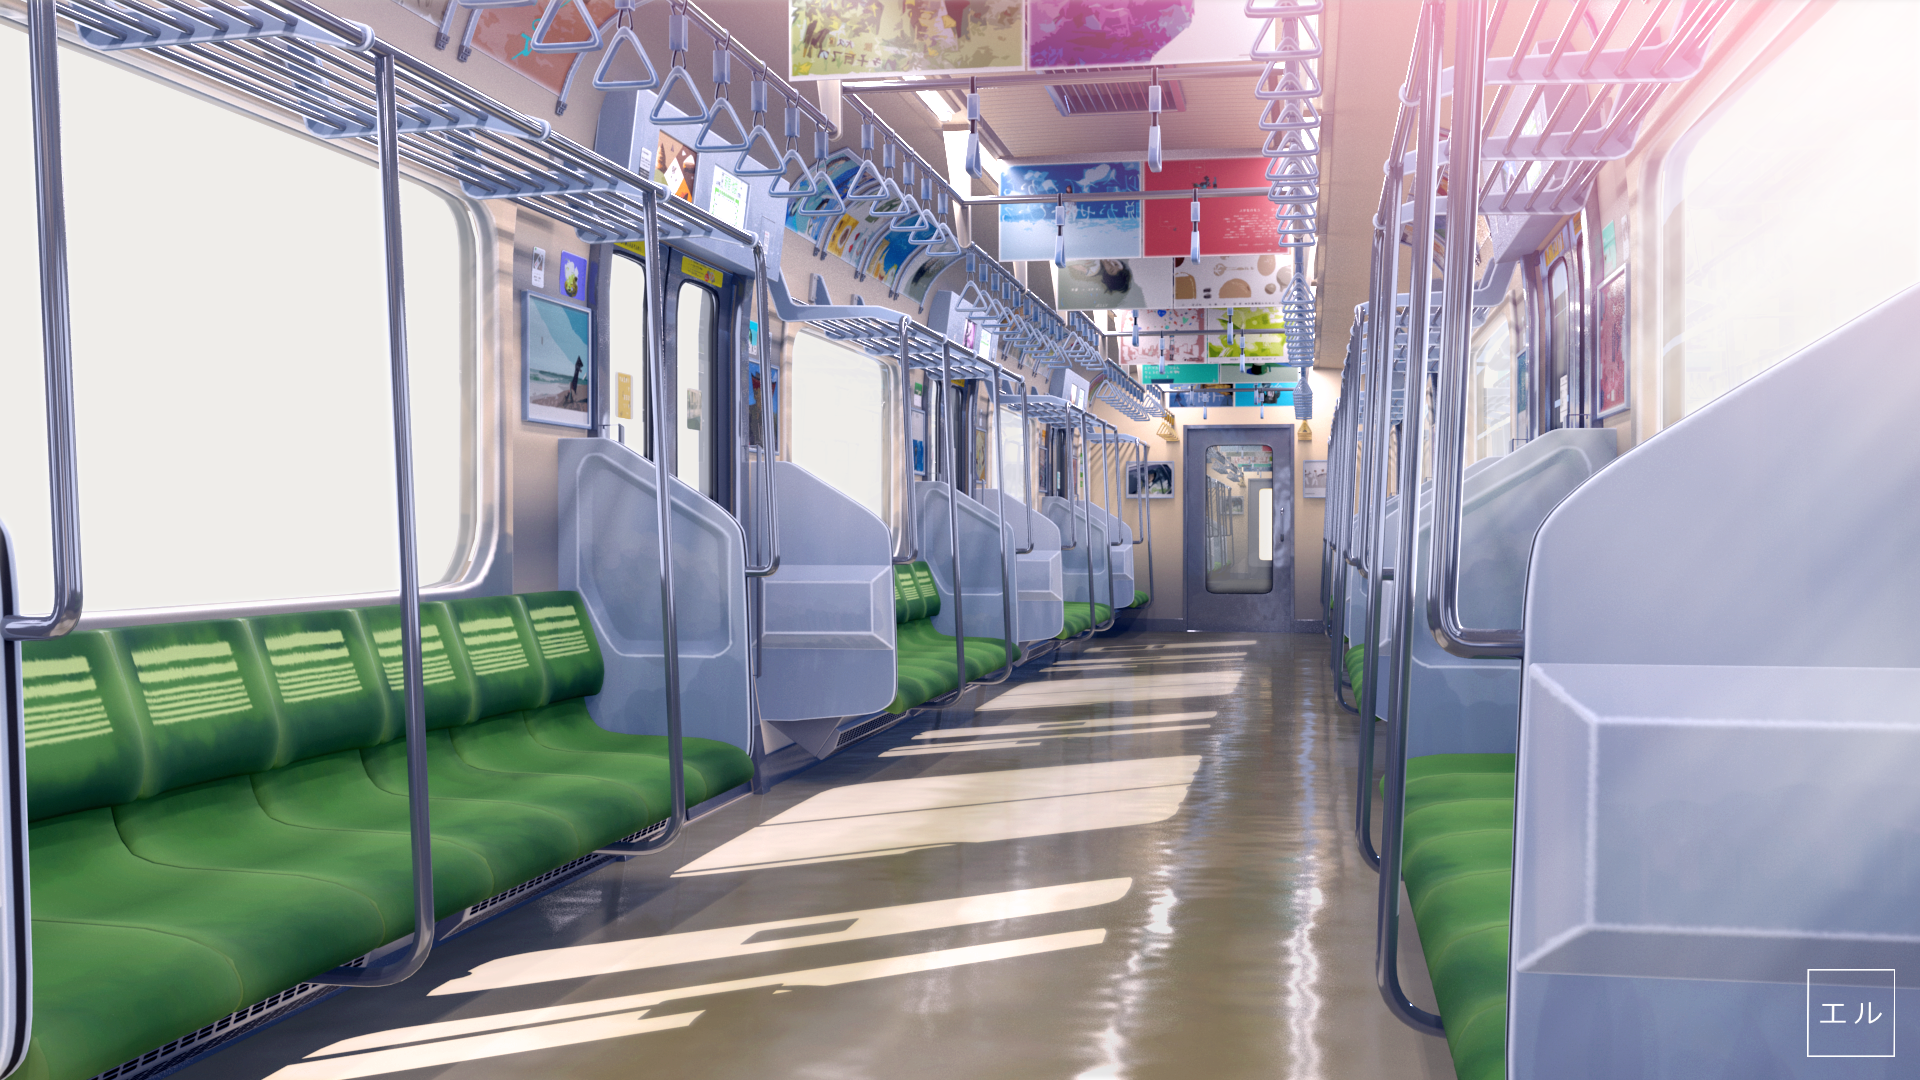 Wallpaper train station railroad anime girl original desktop wallpaper  hd image picture background 48a154  wallpapersmug